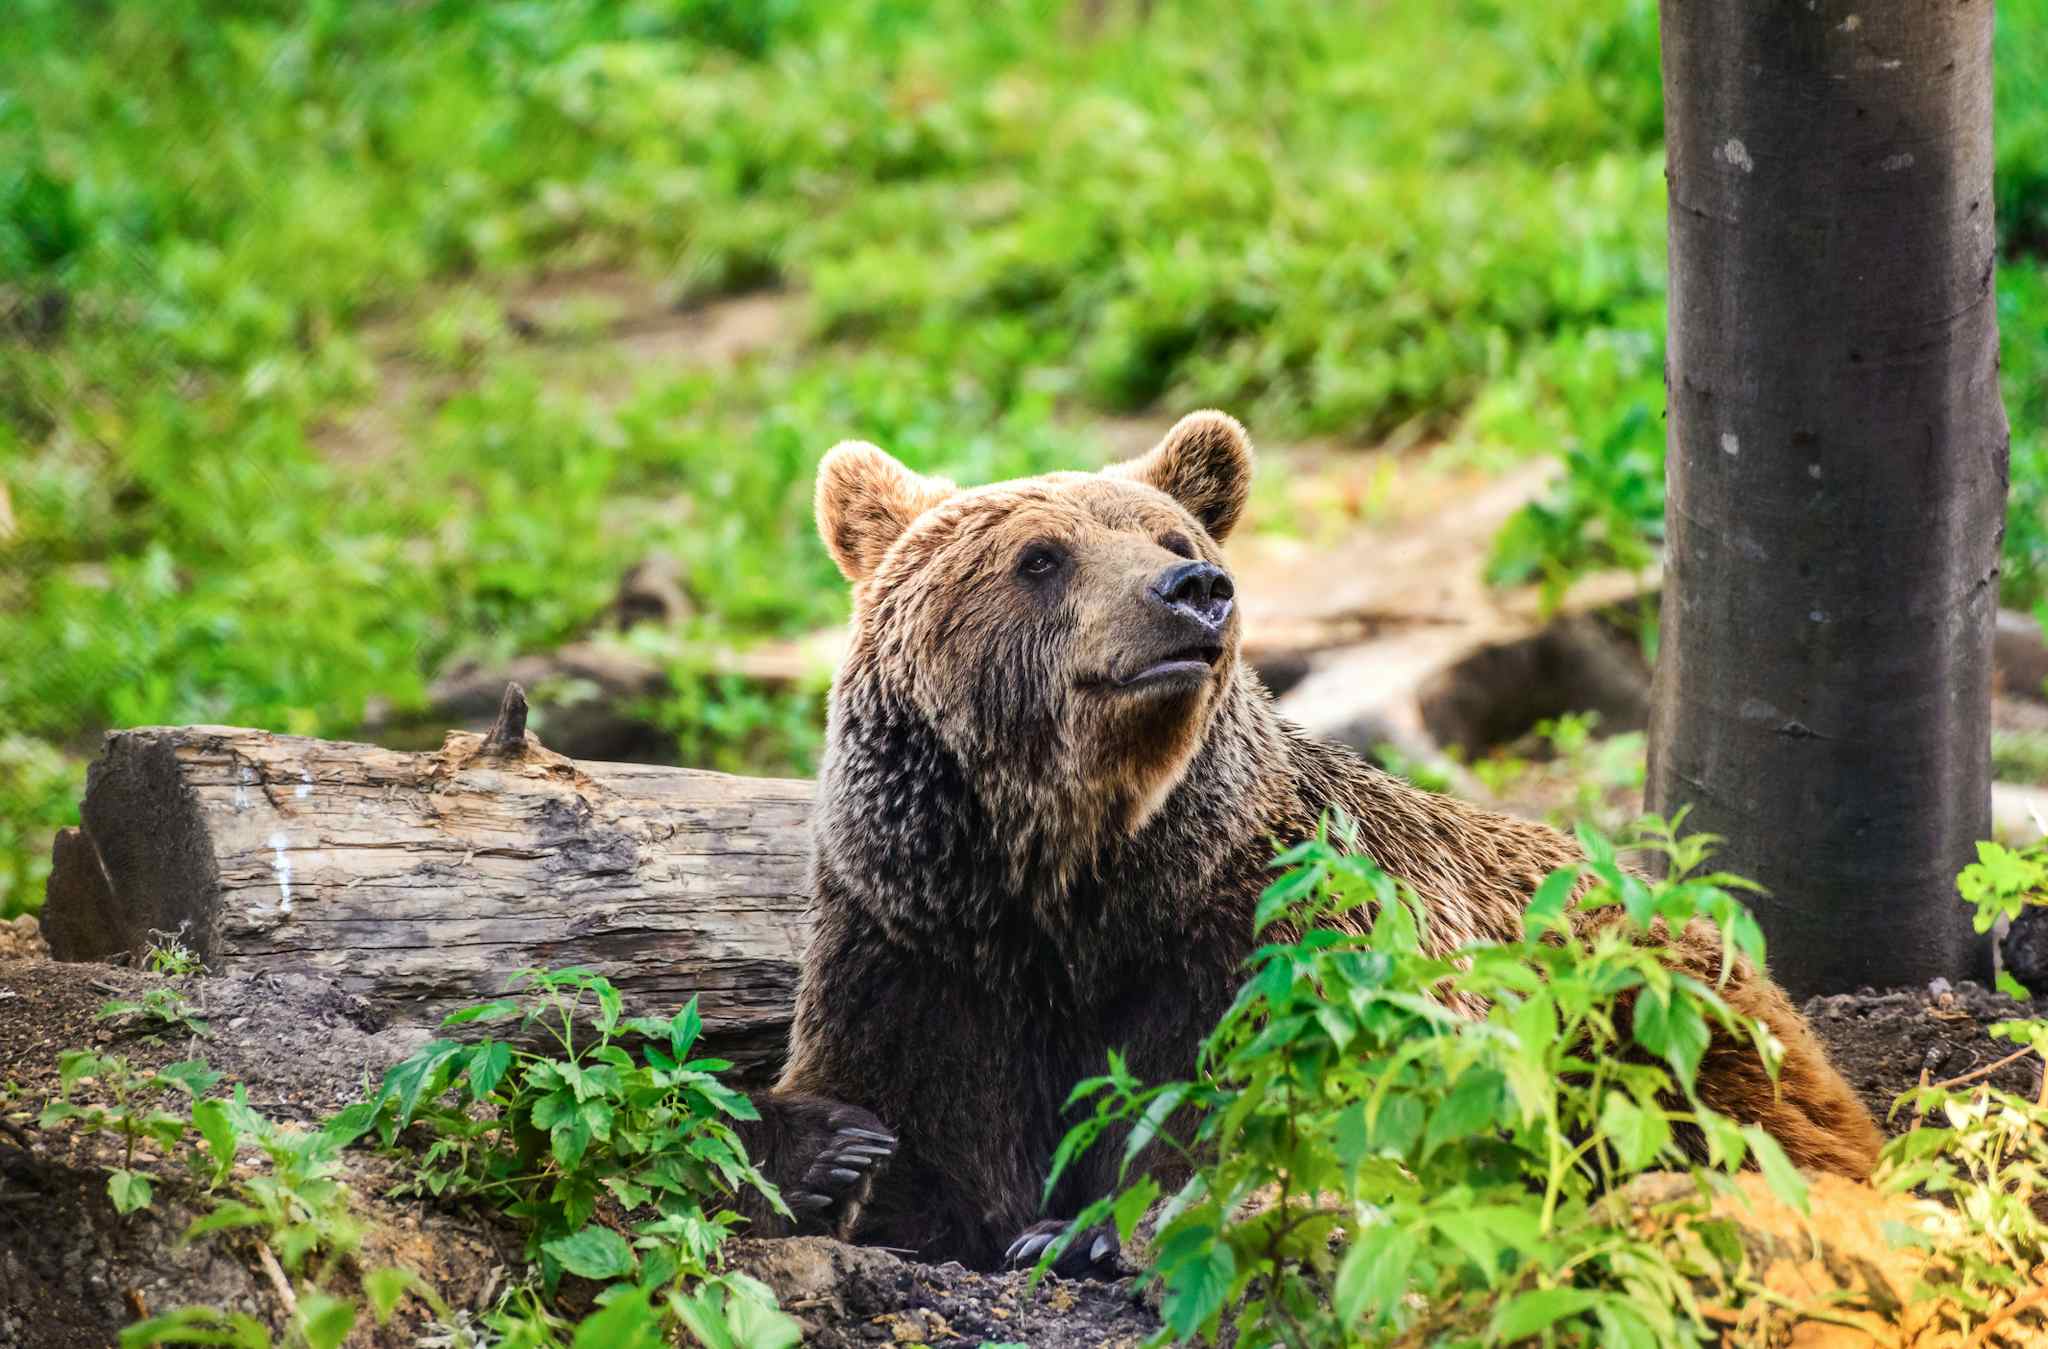 Brown Bear, Romania
Getty: 814515612